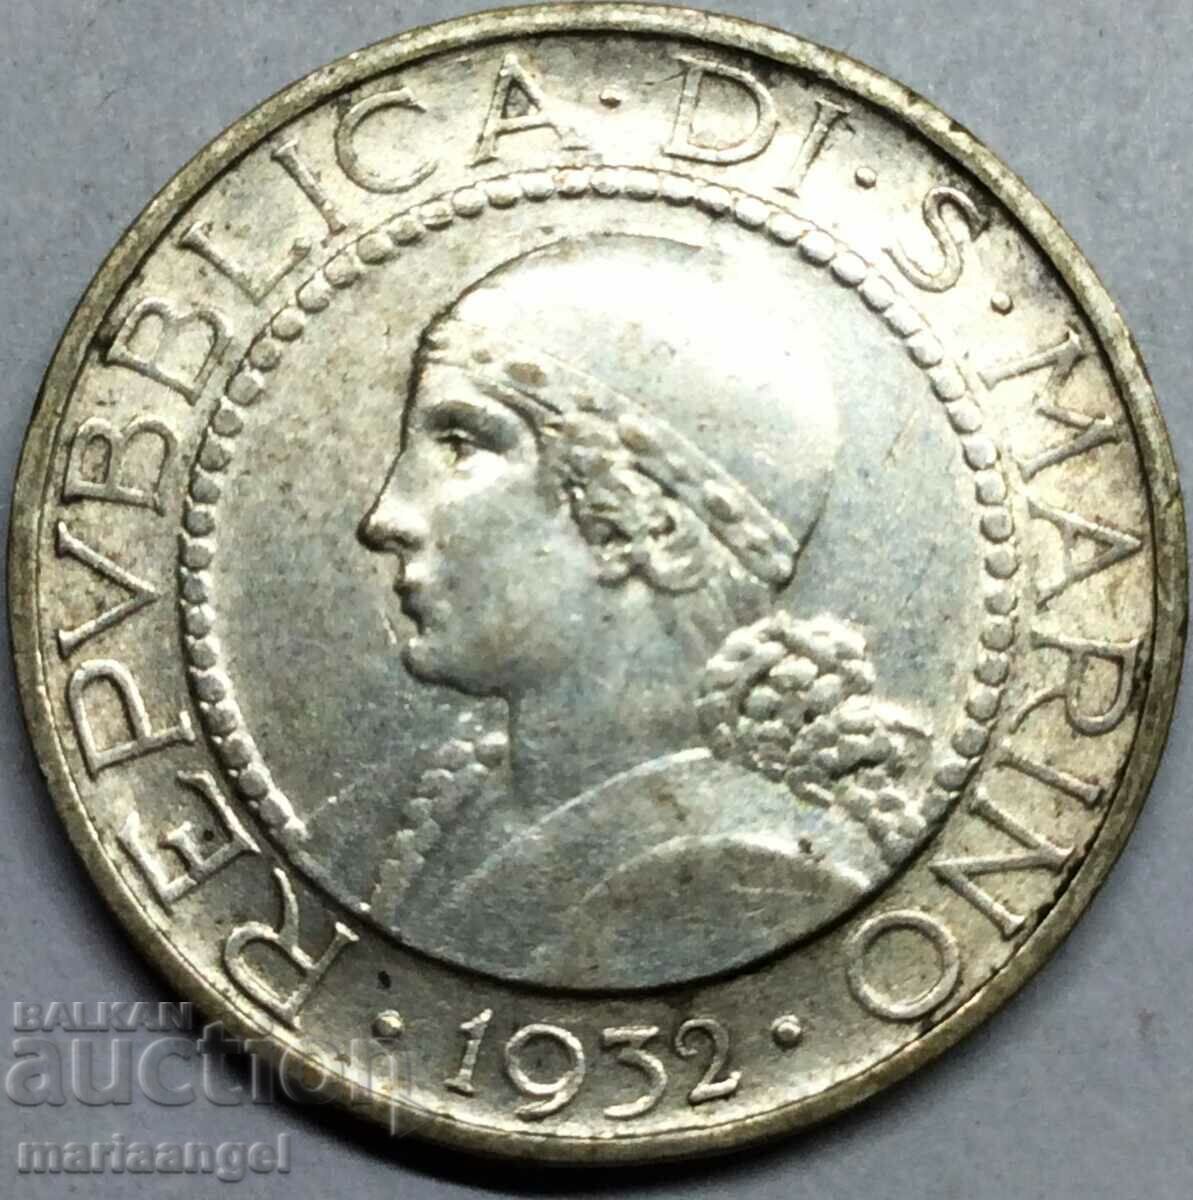 5 Pounds 1932 San Marino Silver - quite rare